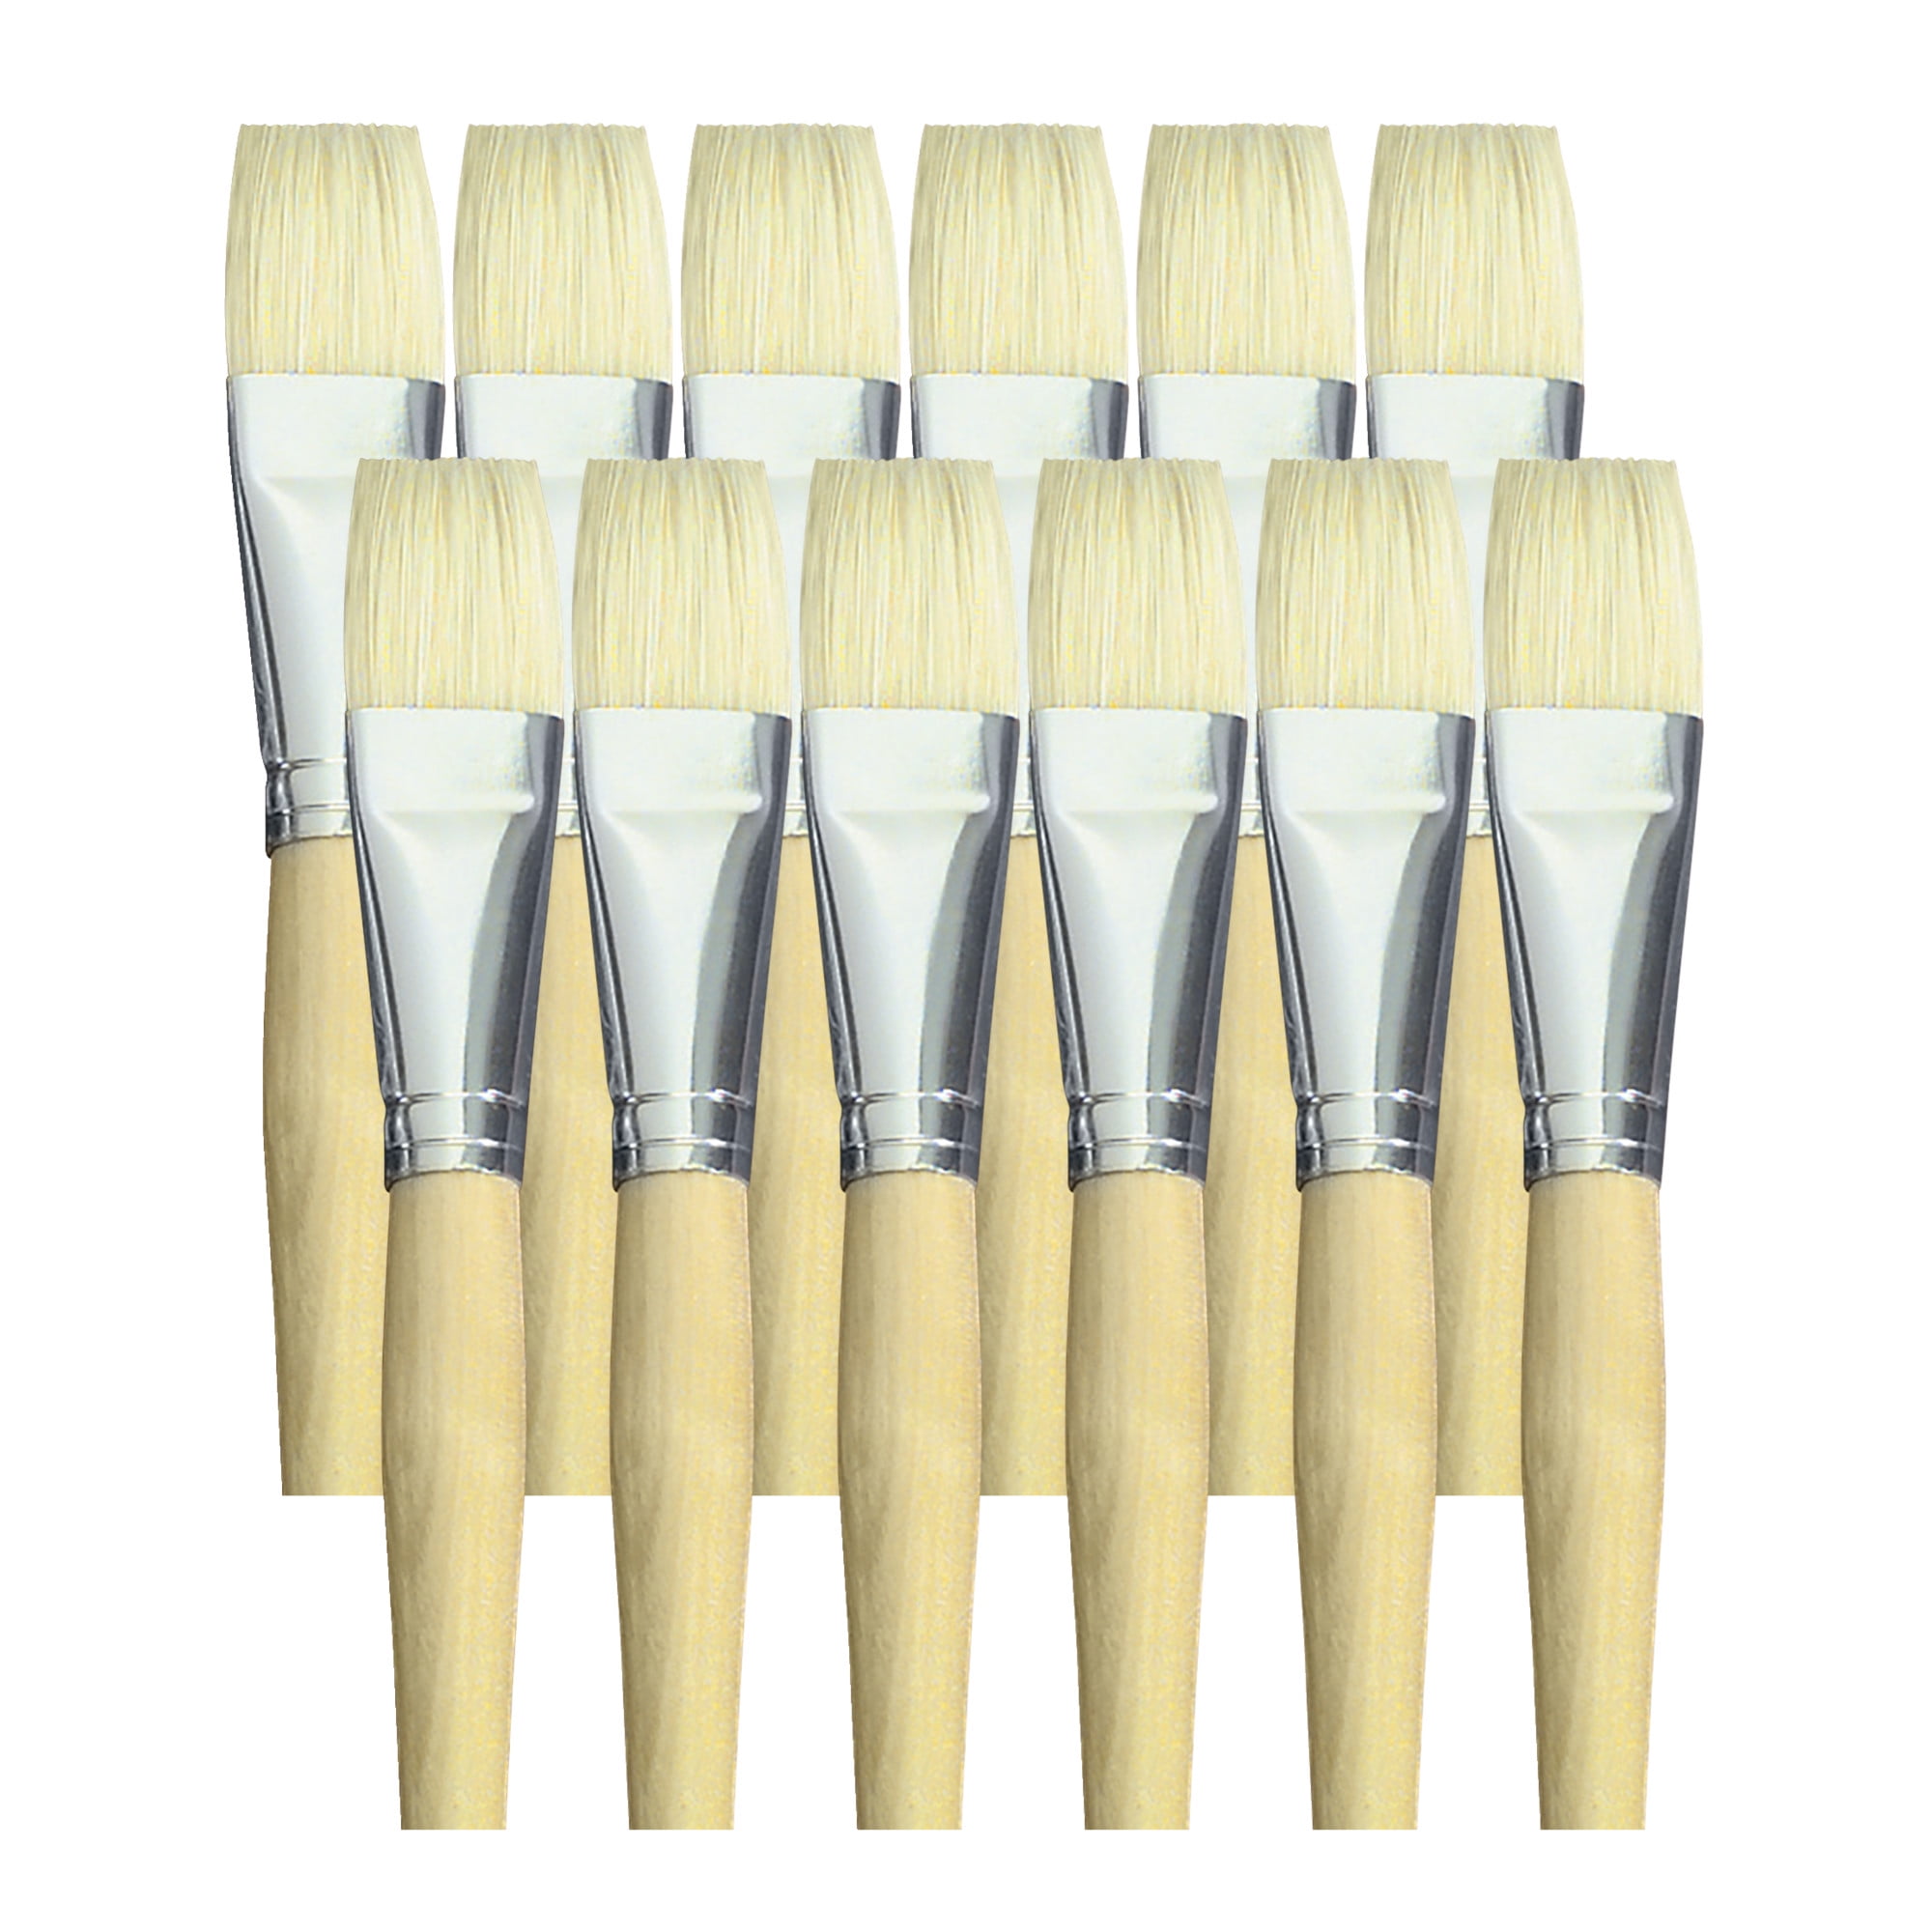 Da Vinci Colineo Synthetic Kolinsky Sable Brush - Flat, Size 24, Short  Handle